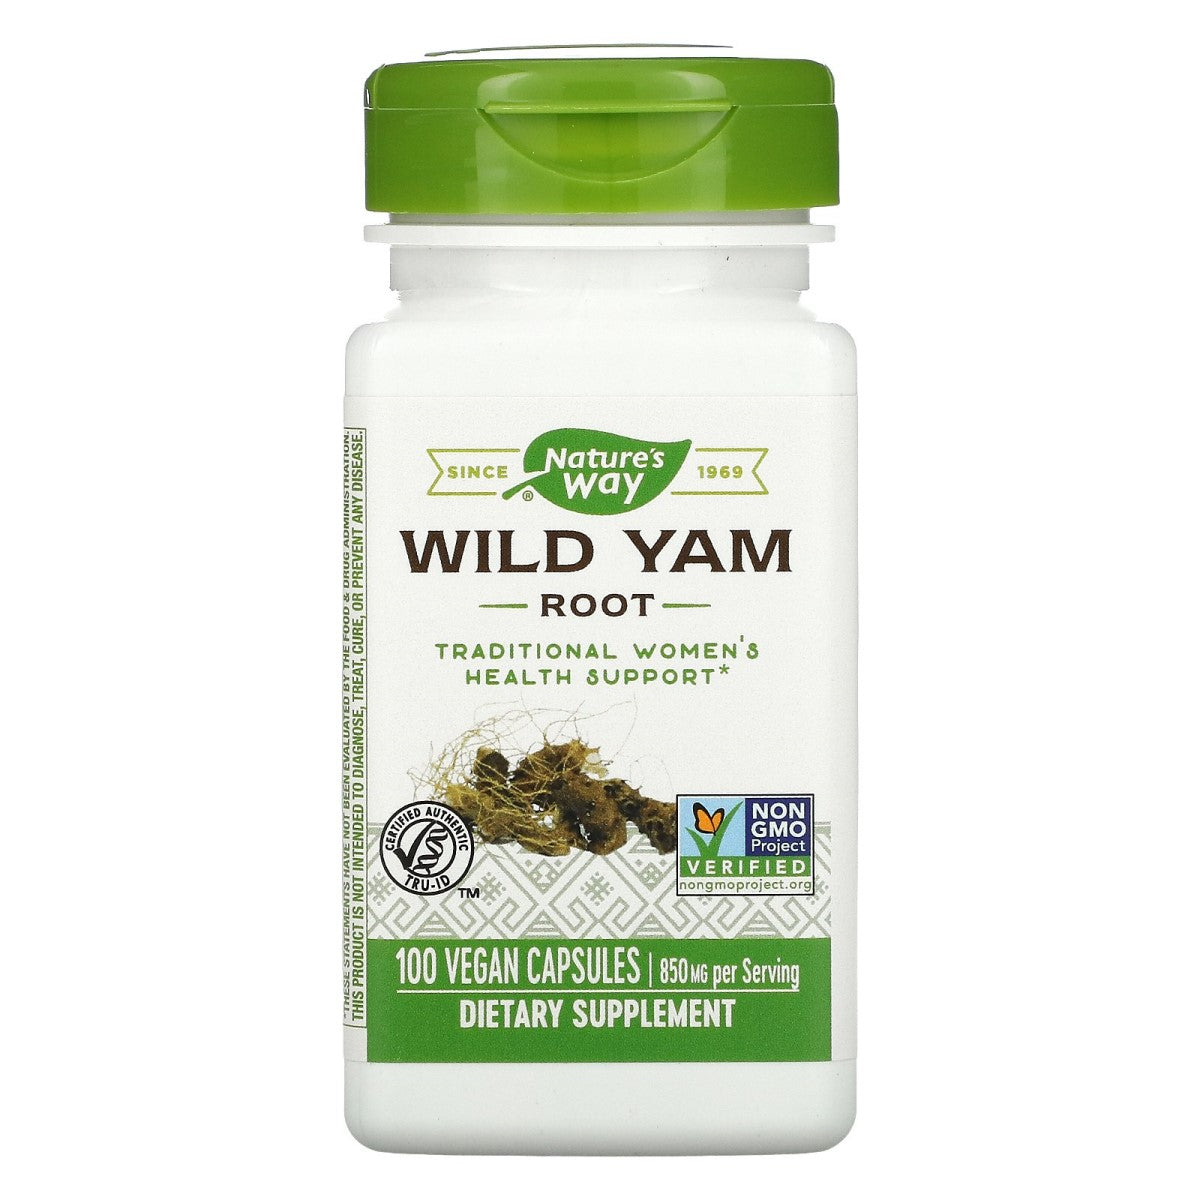 Primary image of Wild Yam